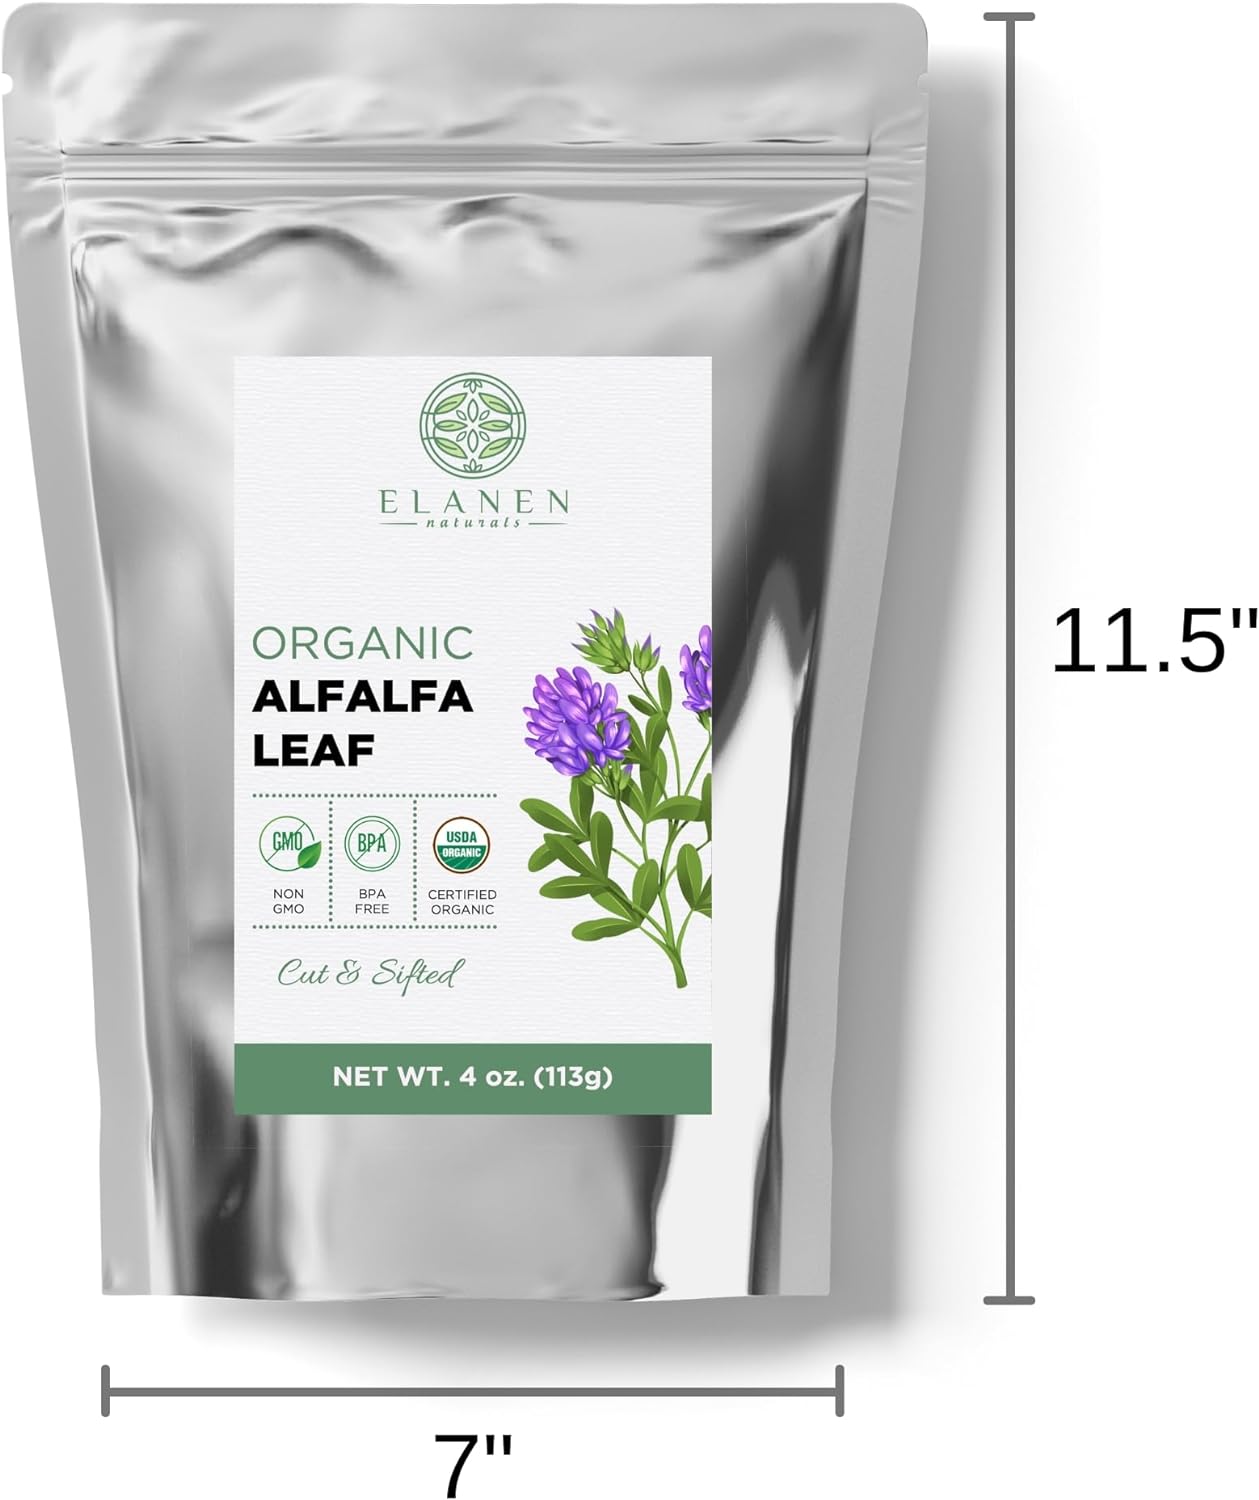 Alfalfa Leaf, USDA Certified Organic, Cut & Sifted